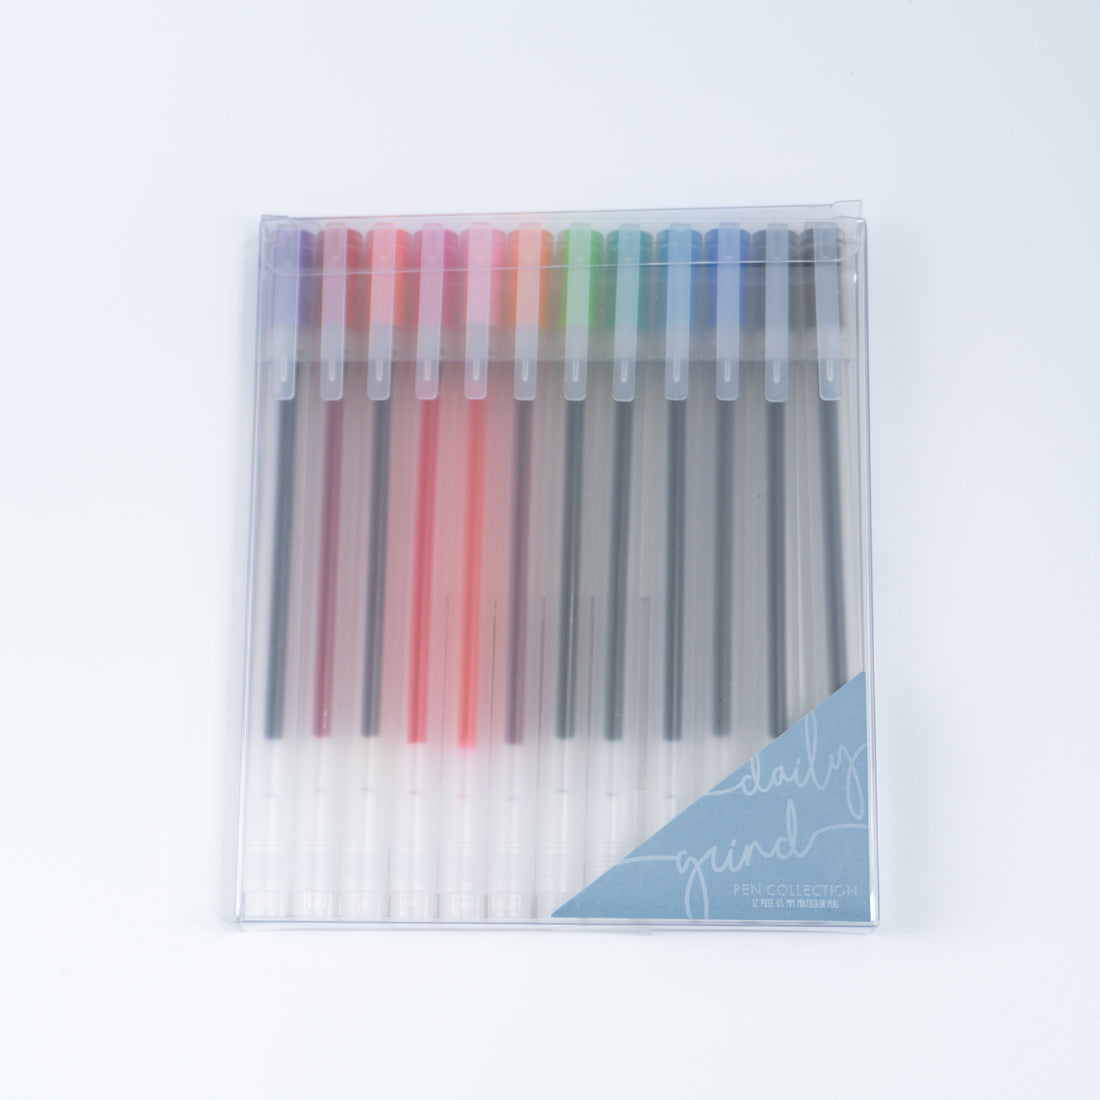 Set of twelve multicolored pens